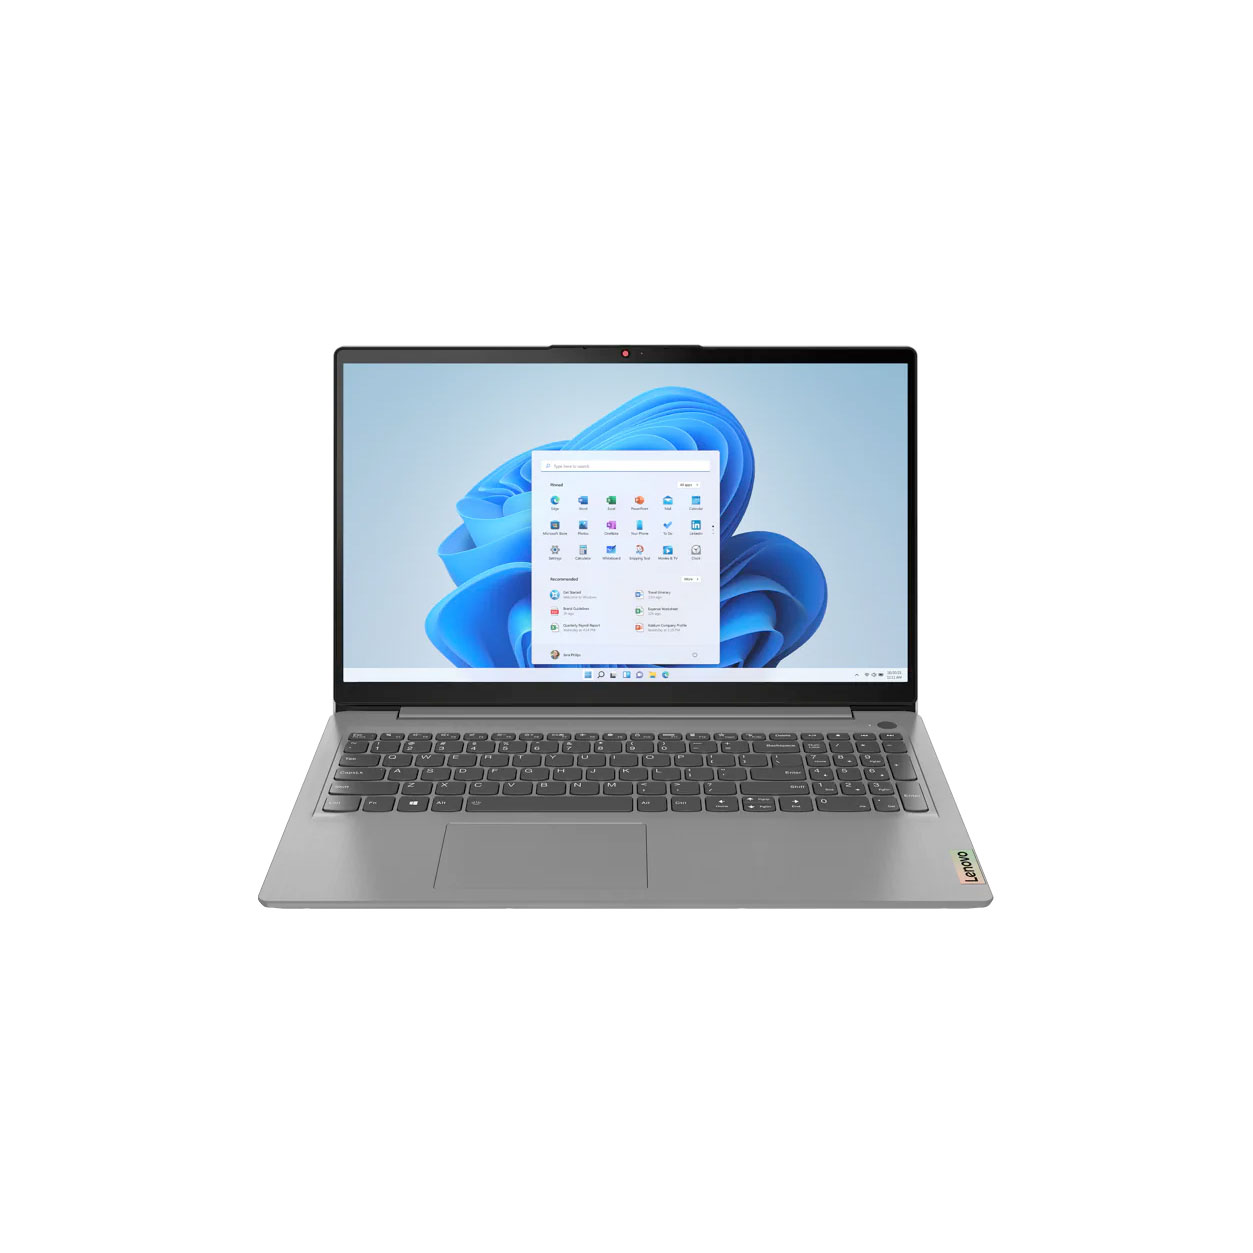 Microsoft：Lenovo IdeaPad 15.6吋 Laptop只卖$339.99